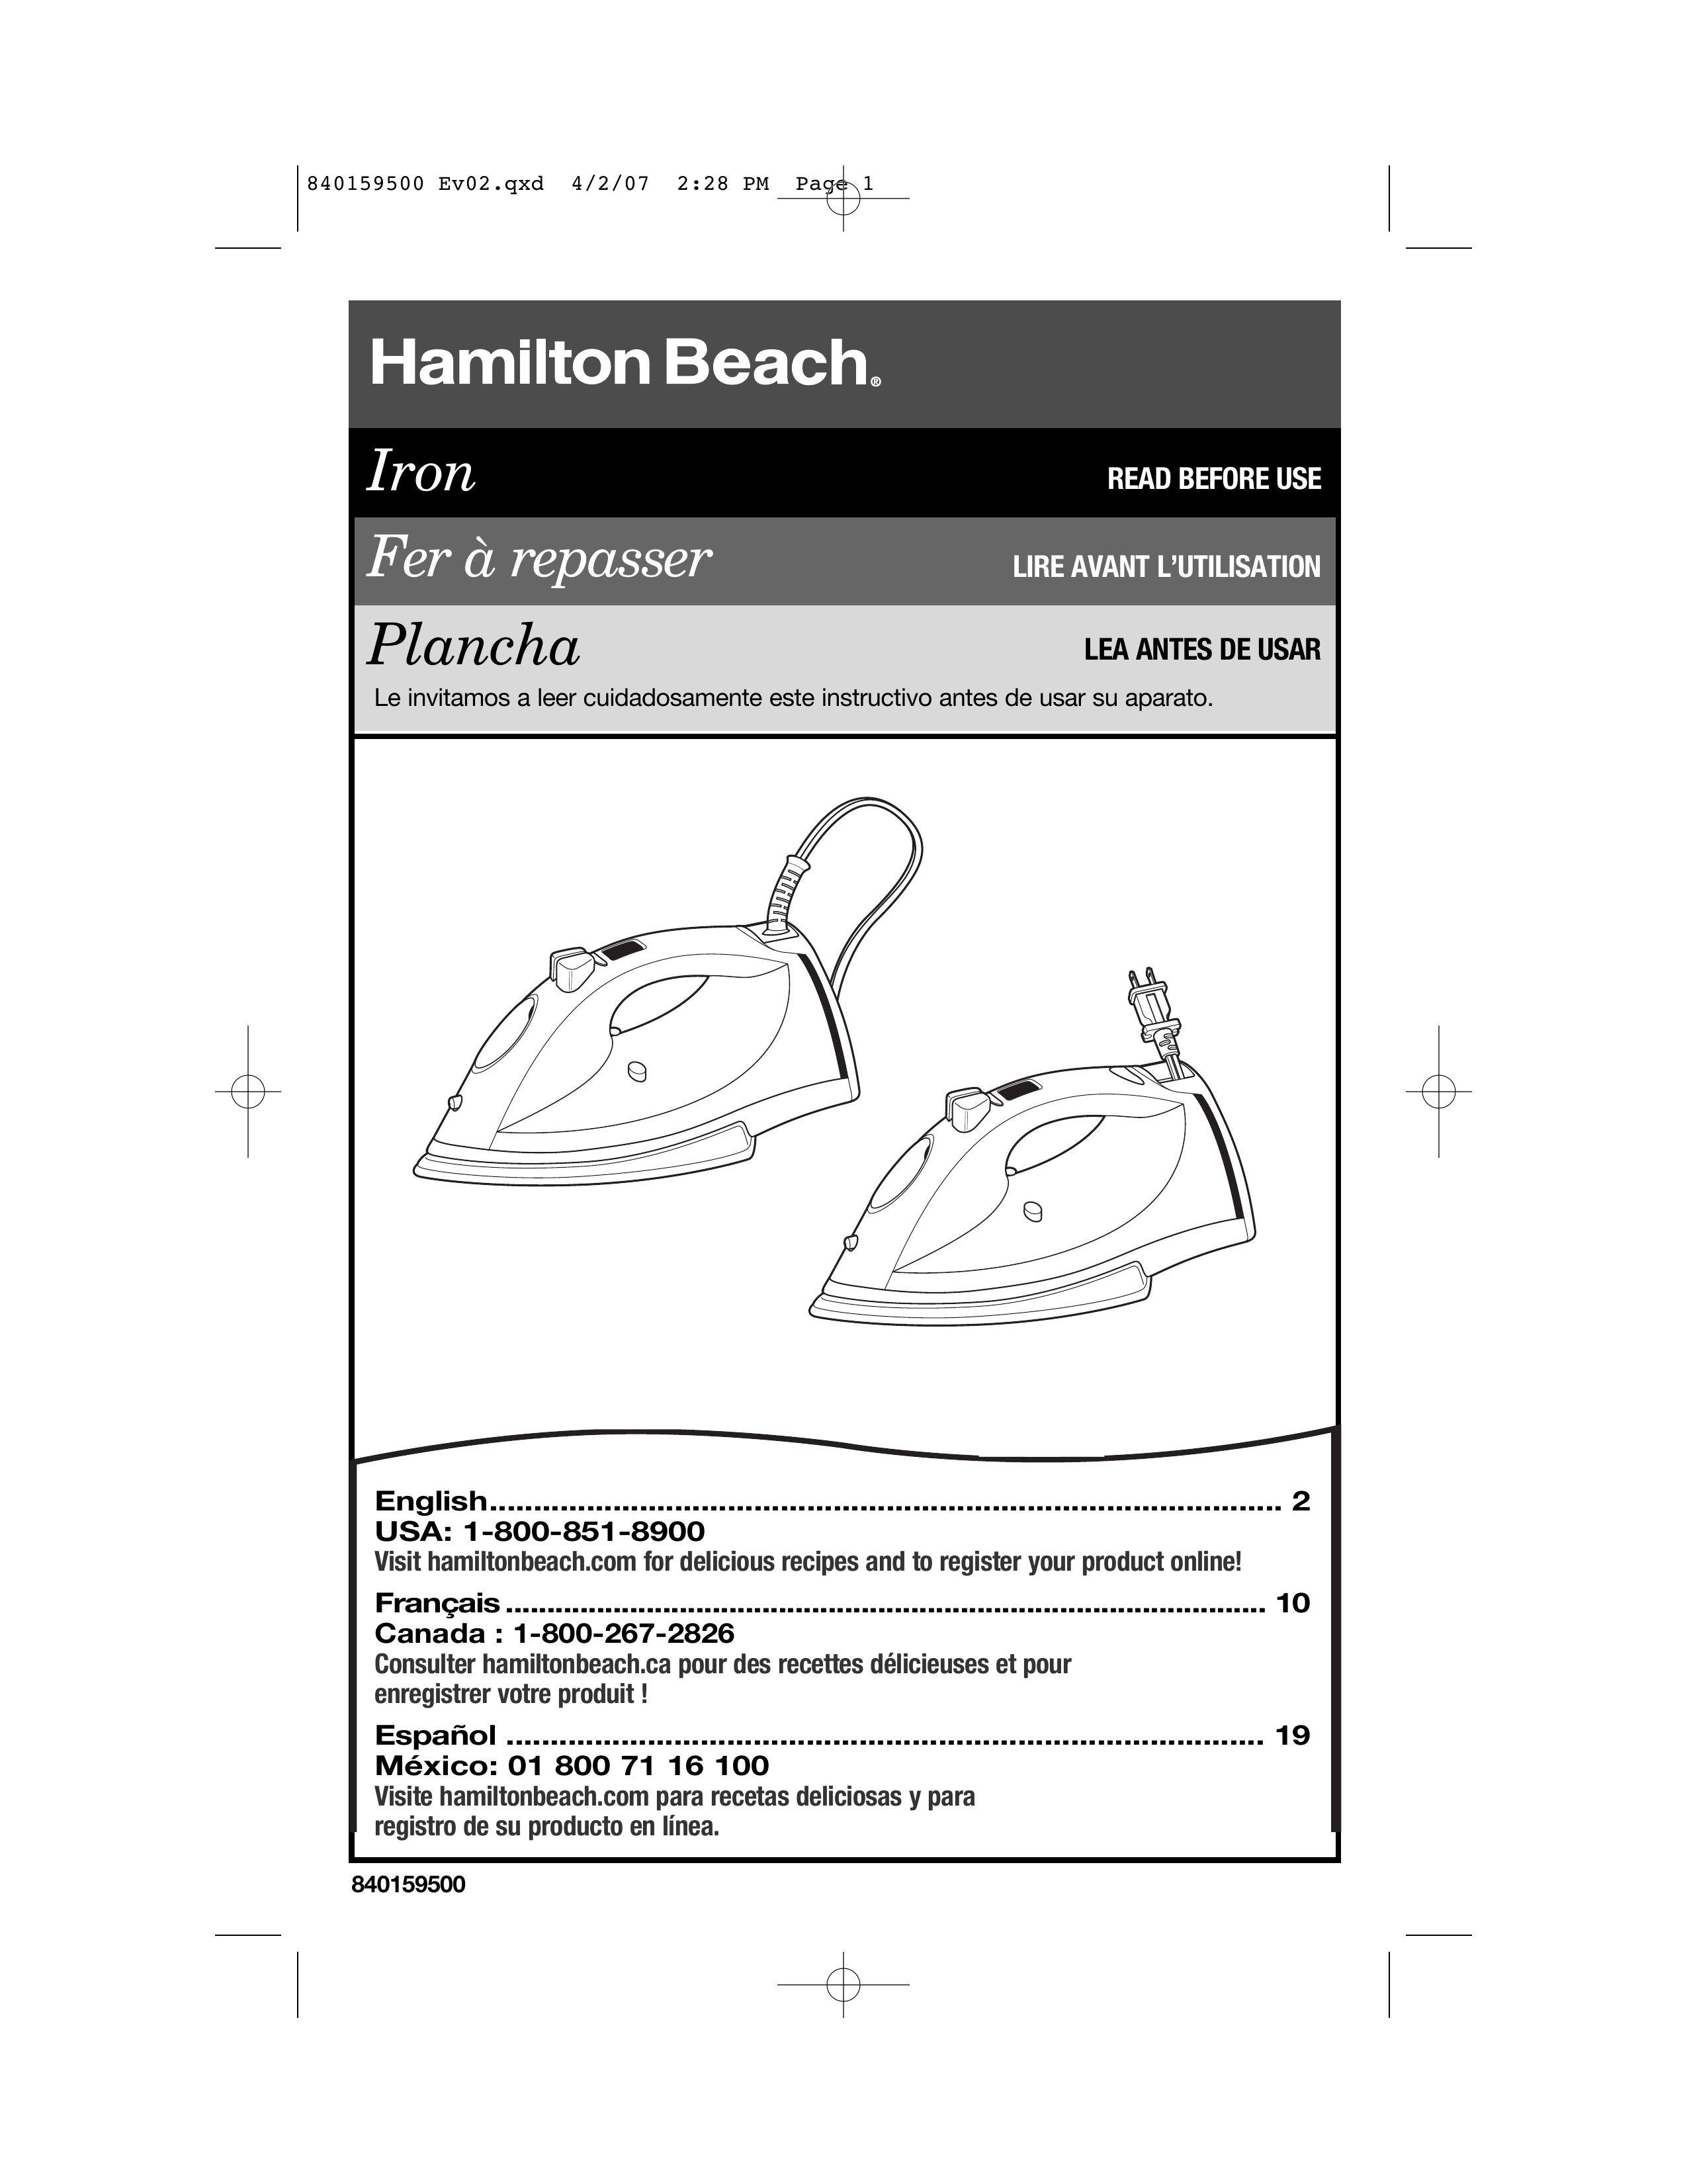 Hamilton Beach 840159500 Iron User Manual